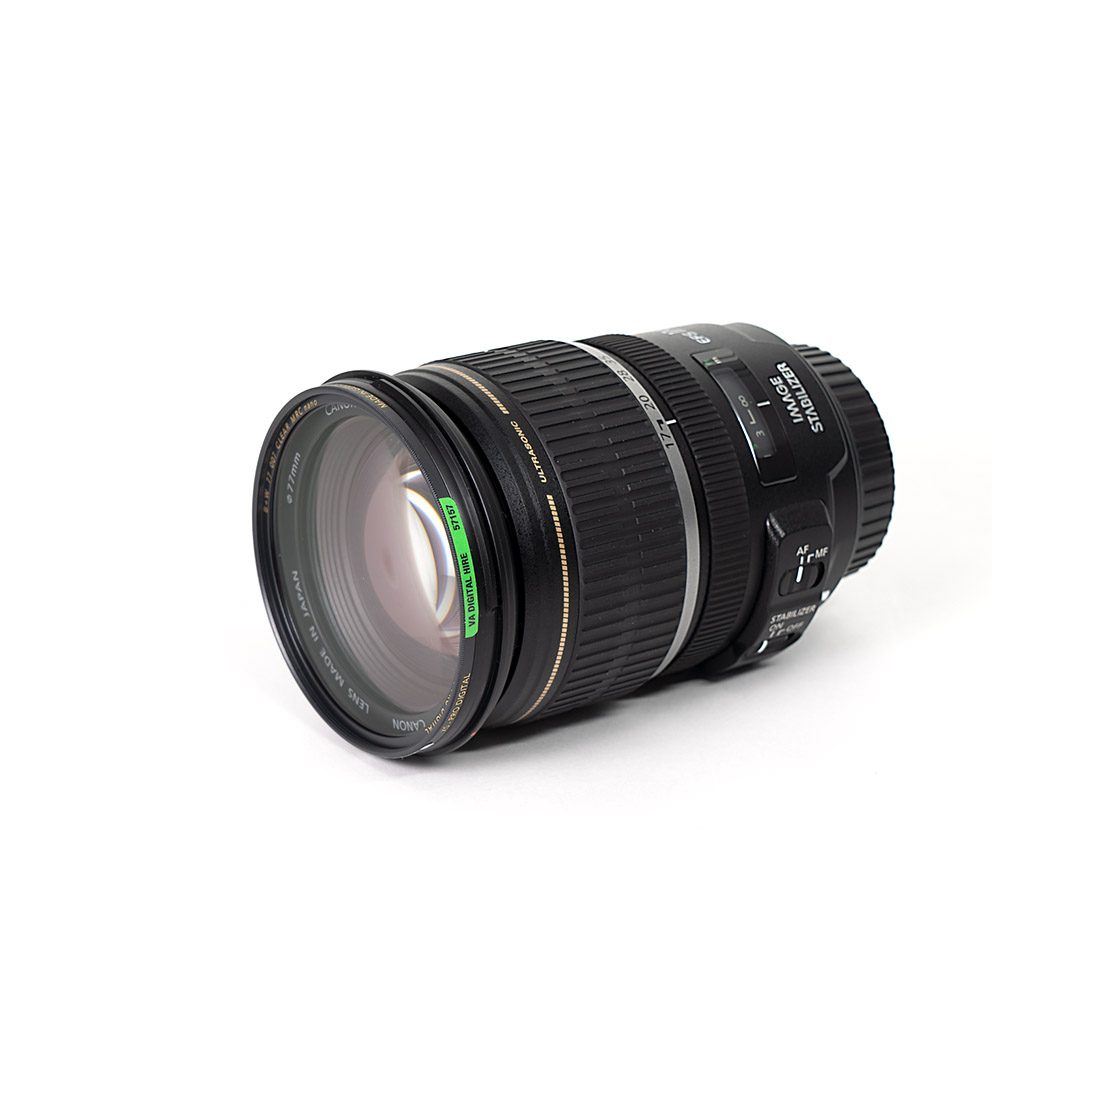 Canon 17-55mm f/2.8 EF-S IS USM Lens